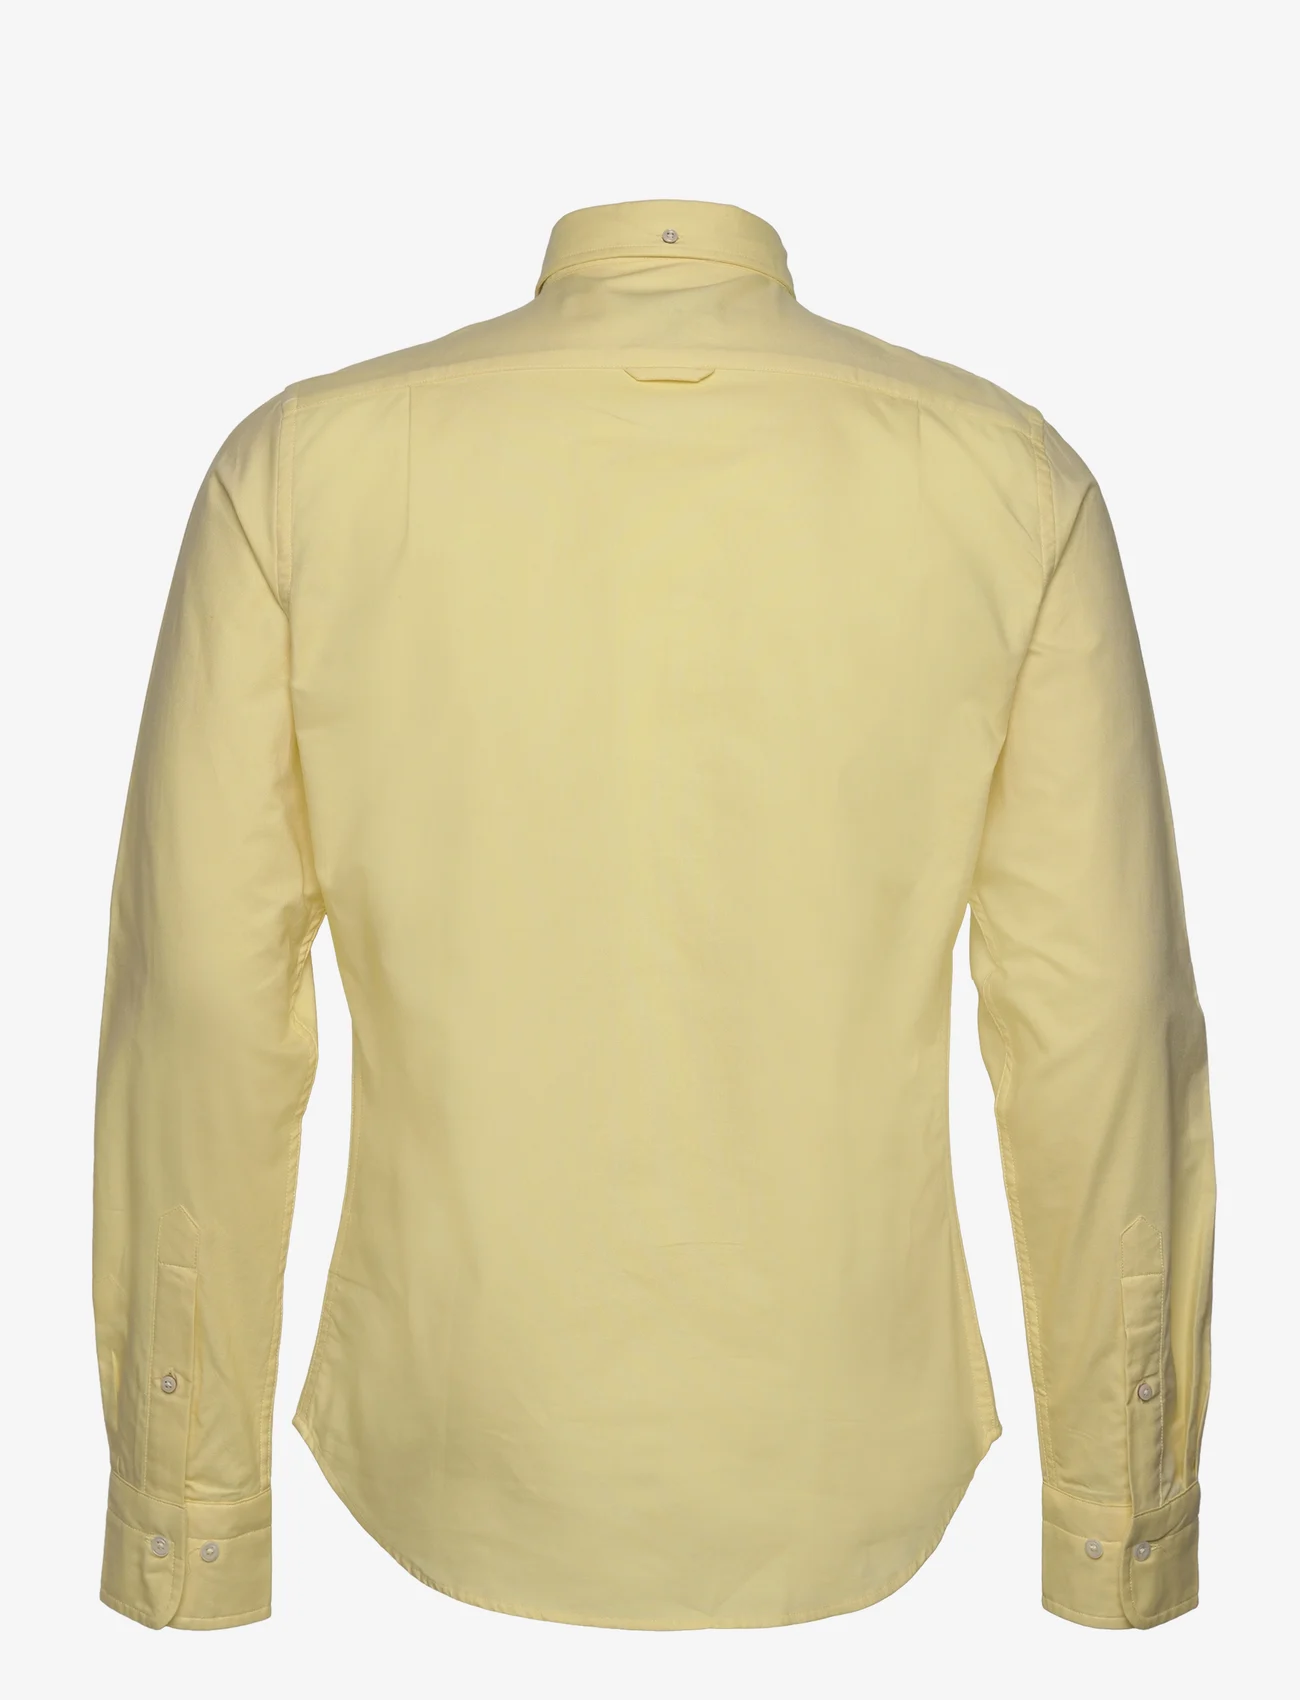 GANT - SLIM OXFORD SHIRT BD - oxford shirts - clear yellow - 1